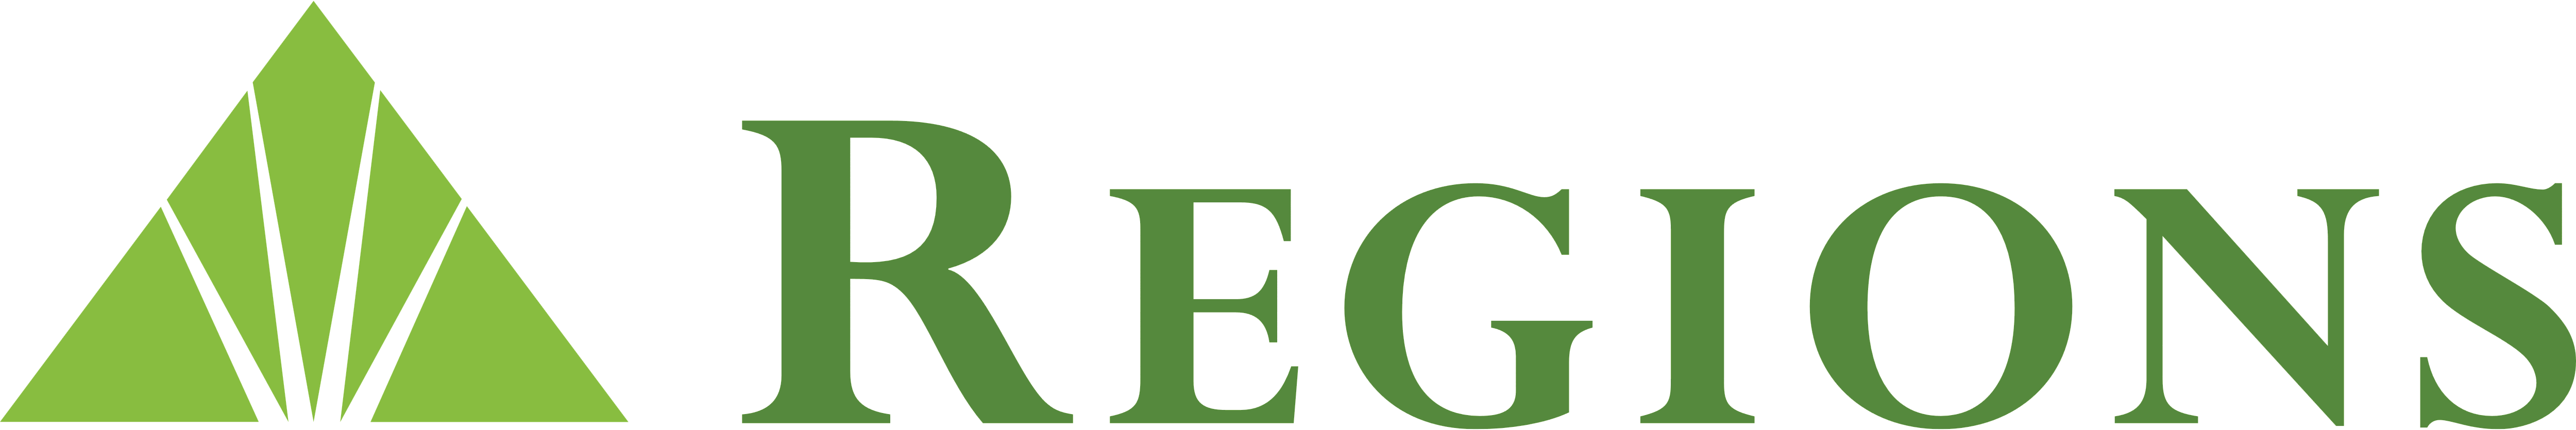 Regions Bank logo